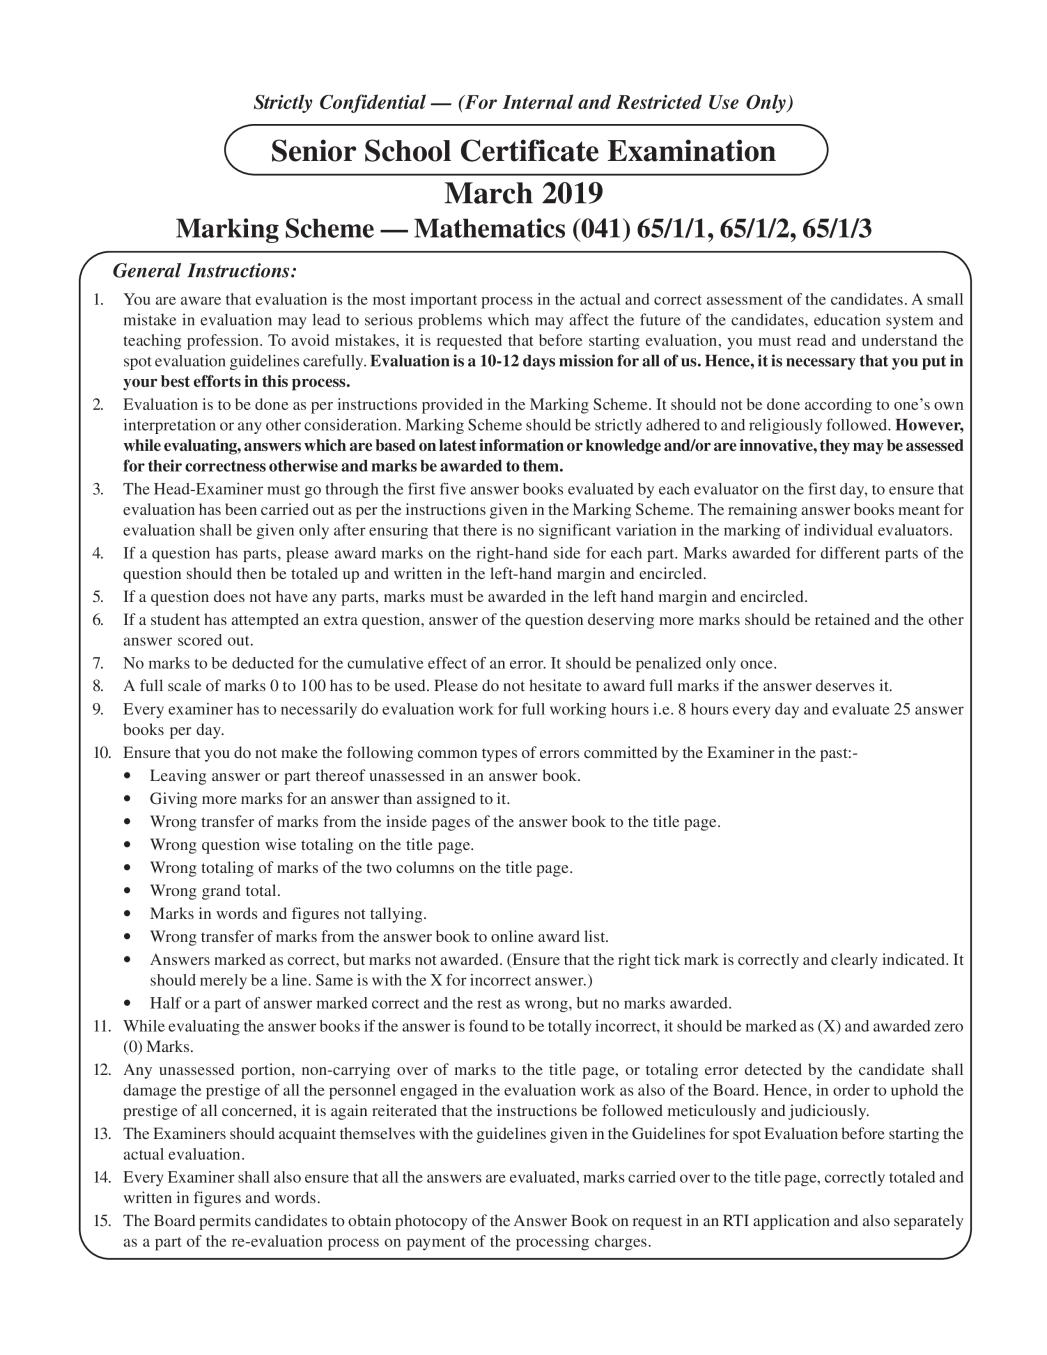 CBSE Class 12 Mathematics Question Paper 2019 Set 1 Solutions - Page 1